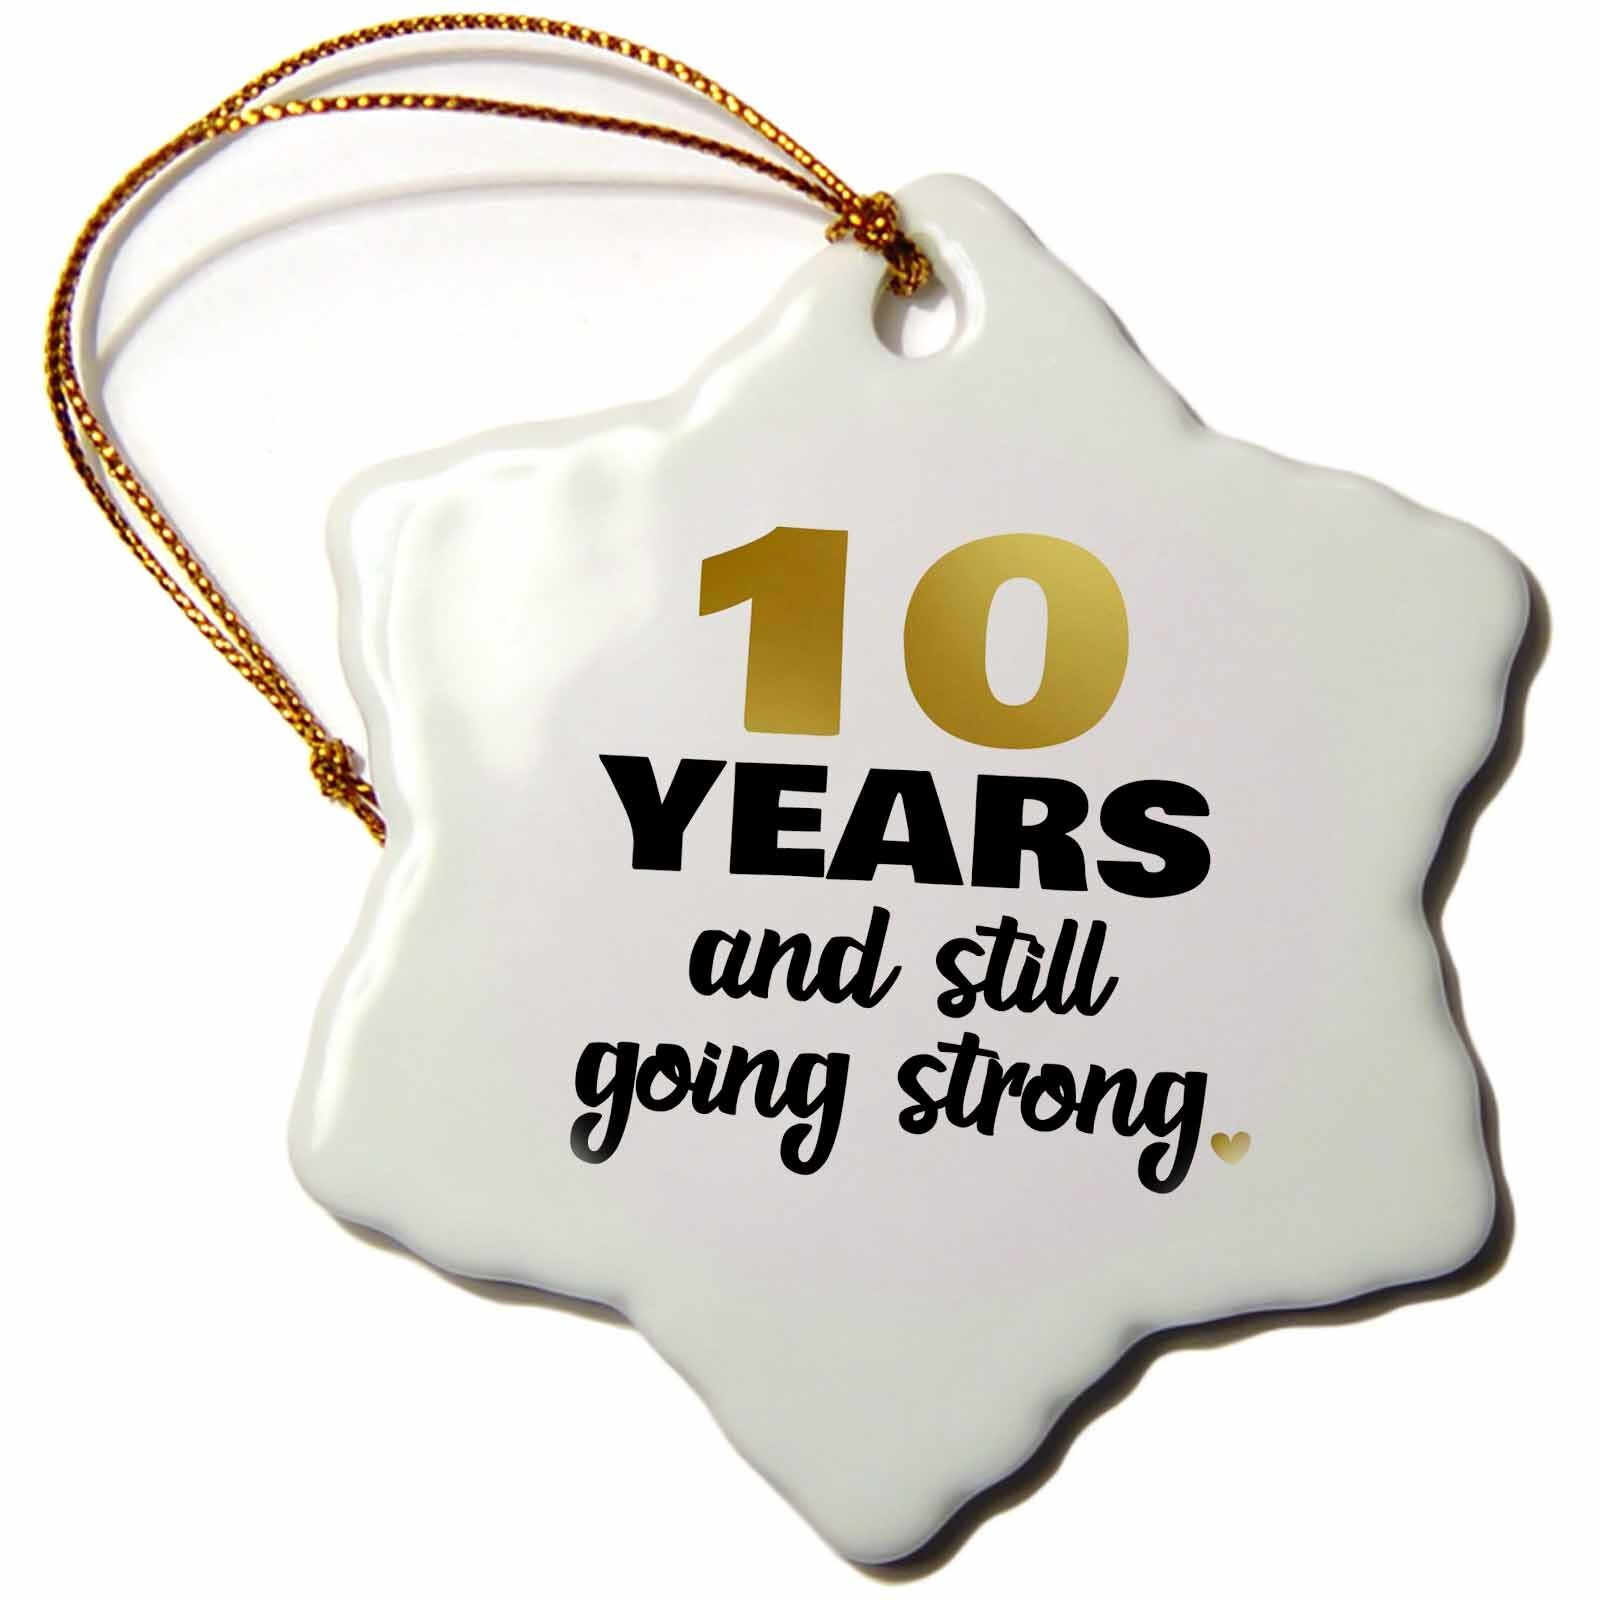 10 year anniversary ornament